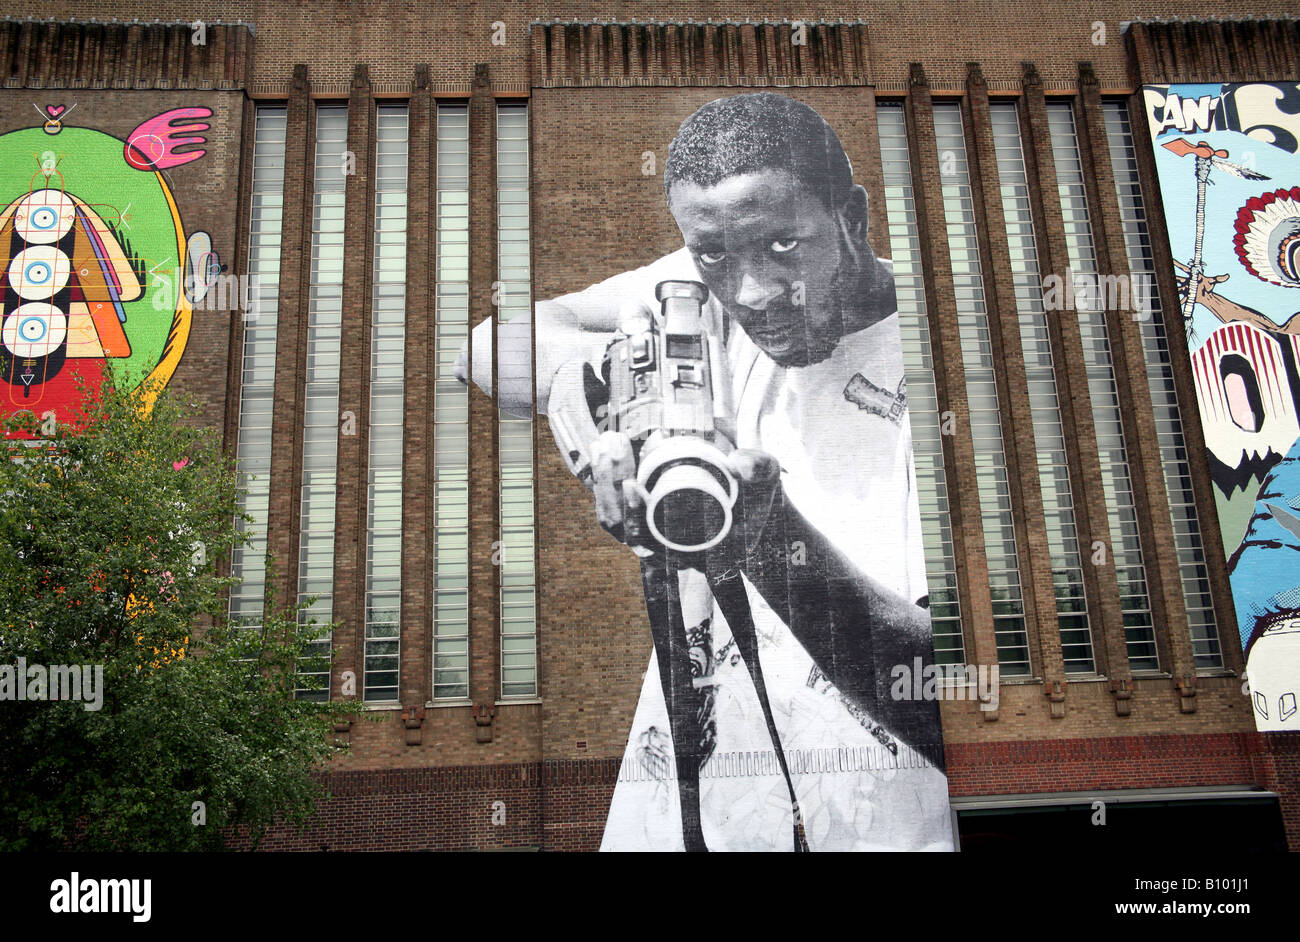 Giant street art figures on walls of Tate Modern in London Stock Photo